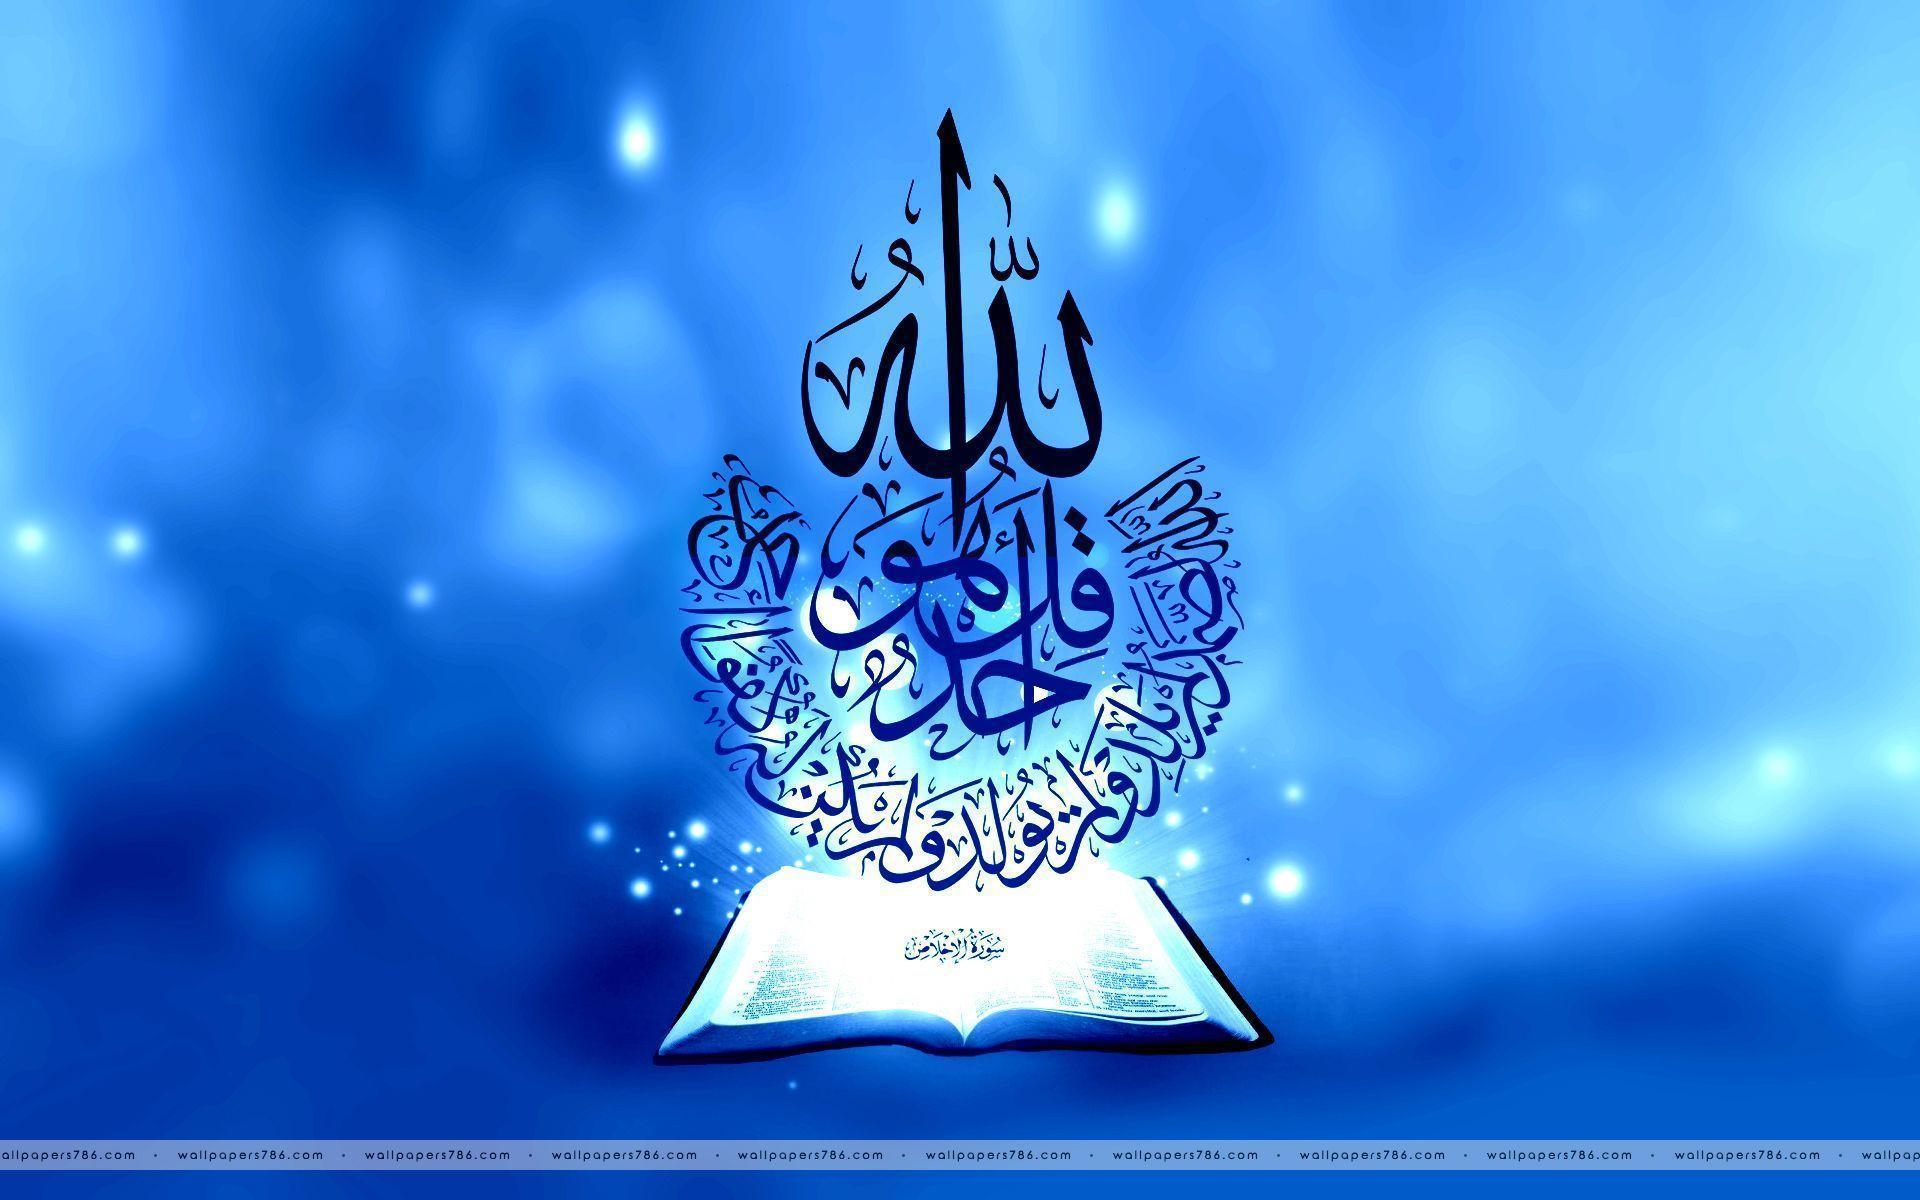 [View 41+] Allah Wallpaper Islamic Wallpaper Free Download For Mobile